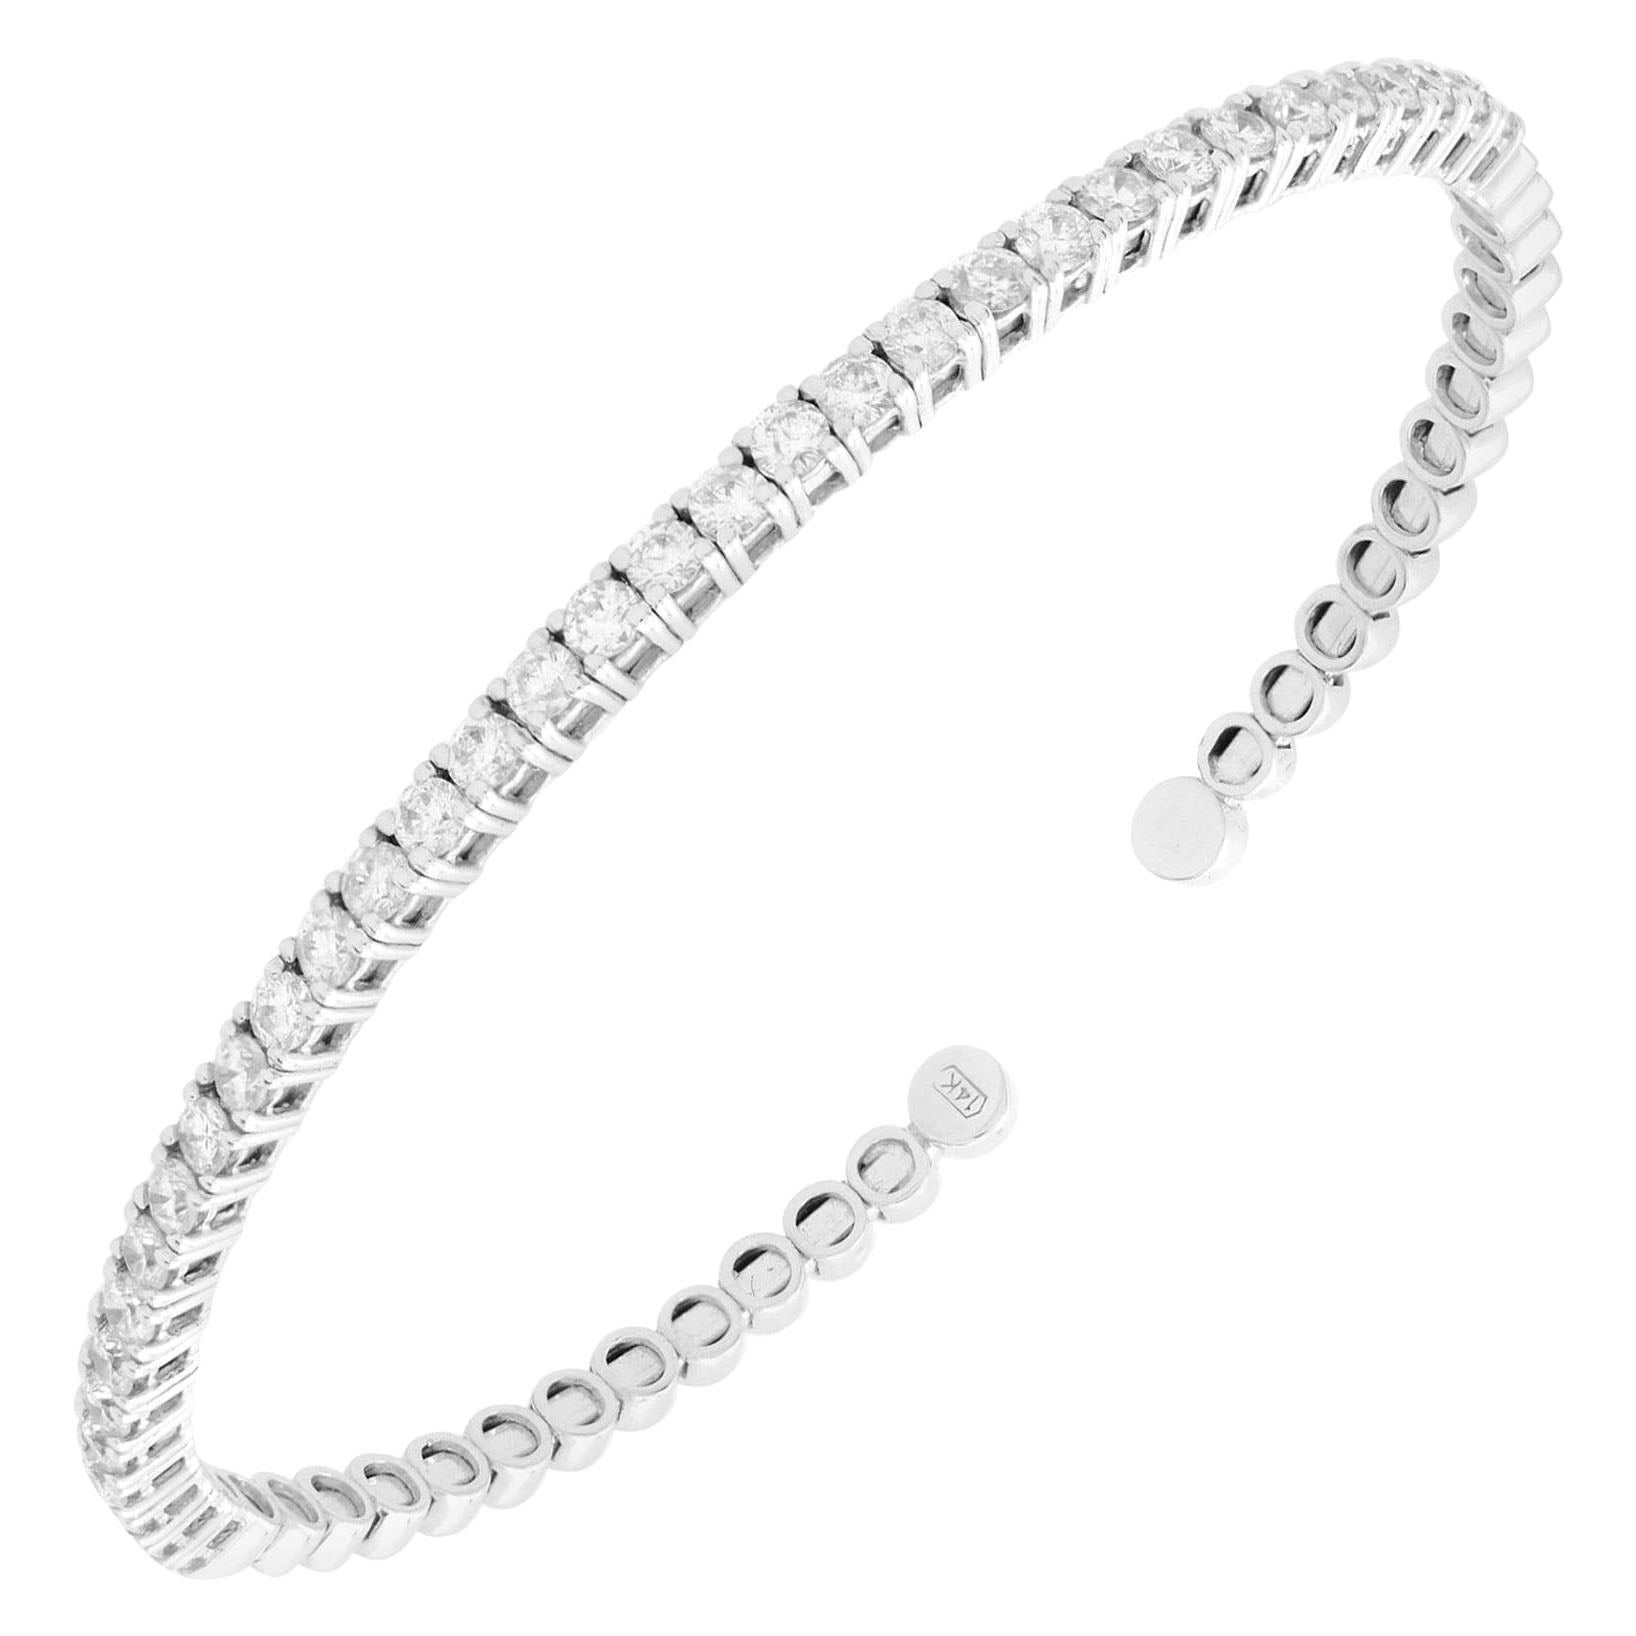 Rachel Koen Diamond Ladies Cuff Bracelet 14K White Gold 1.88cttw